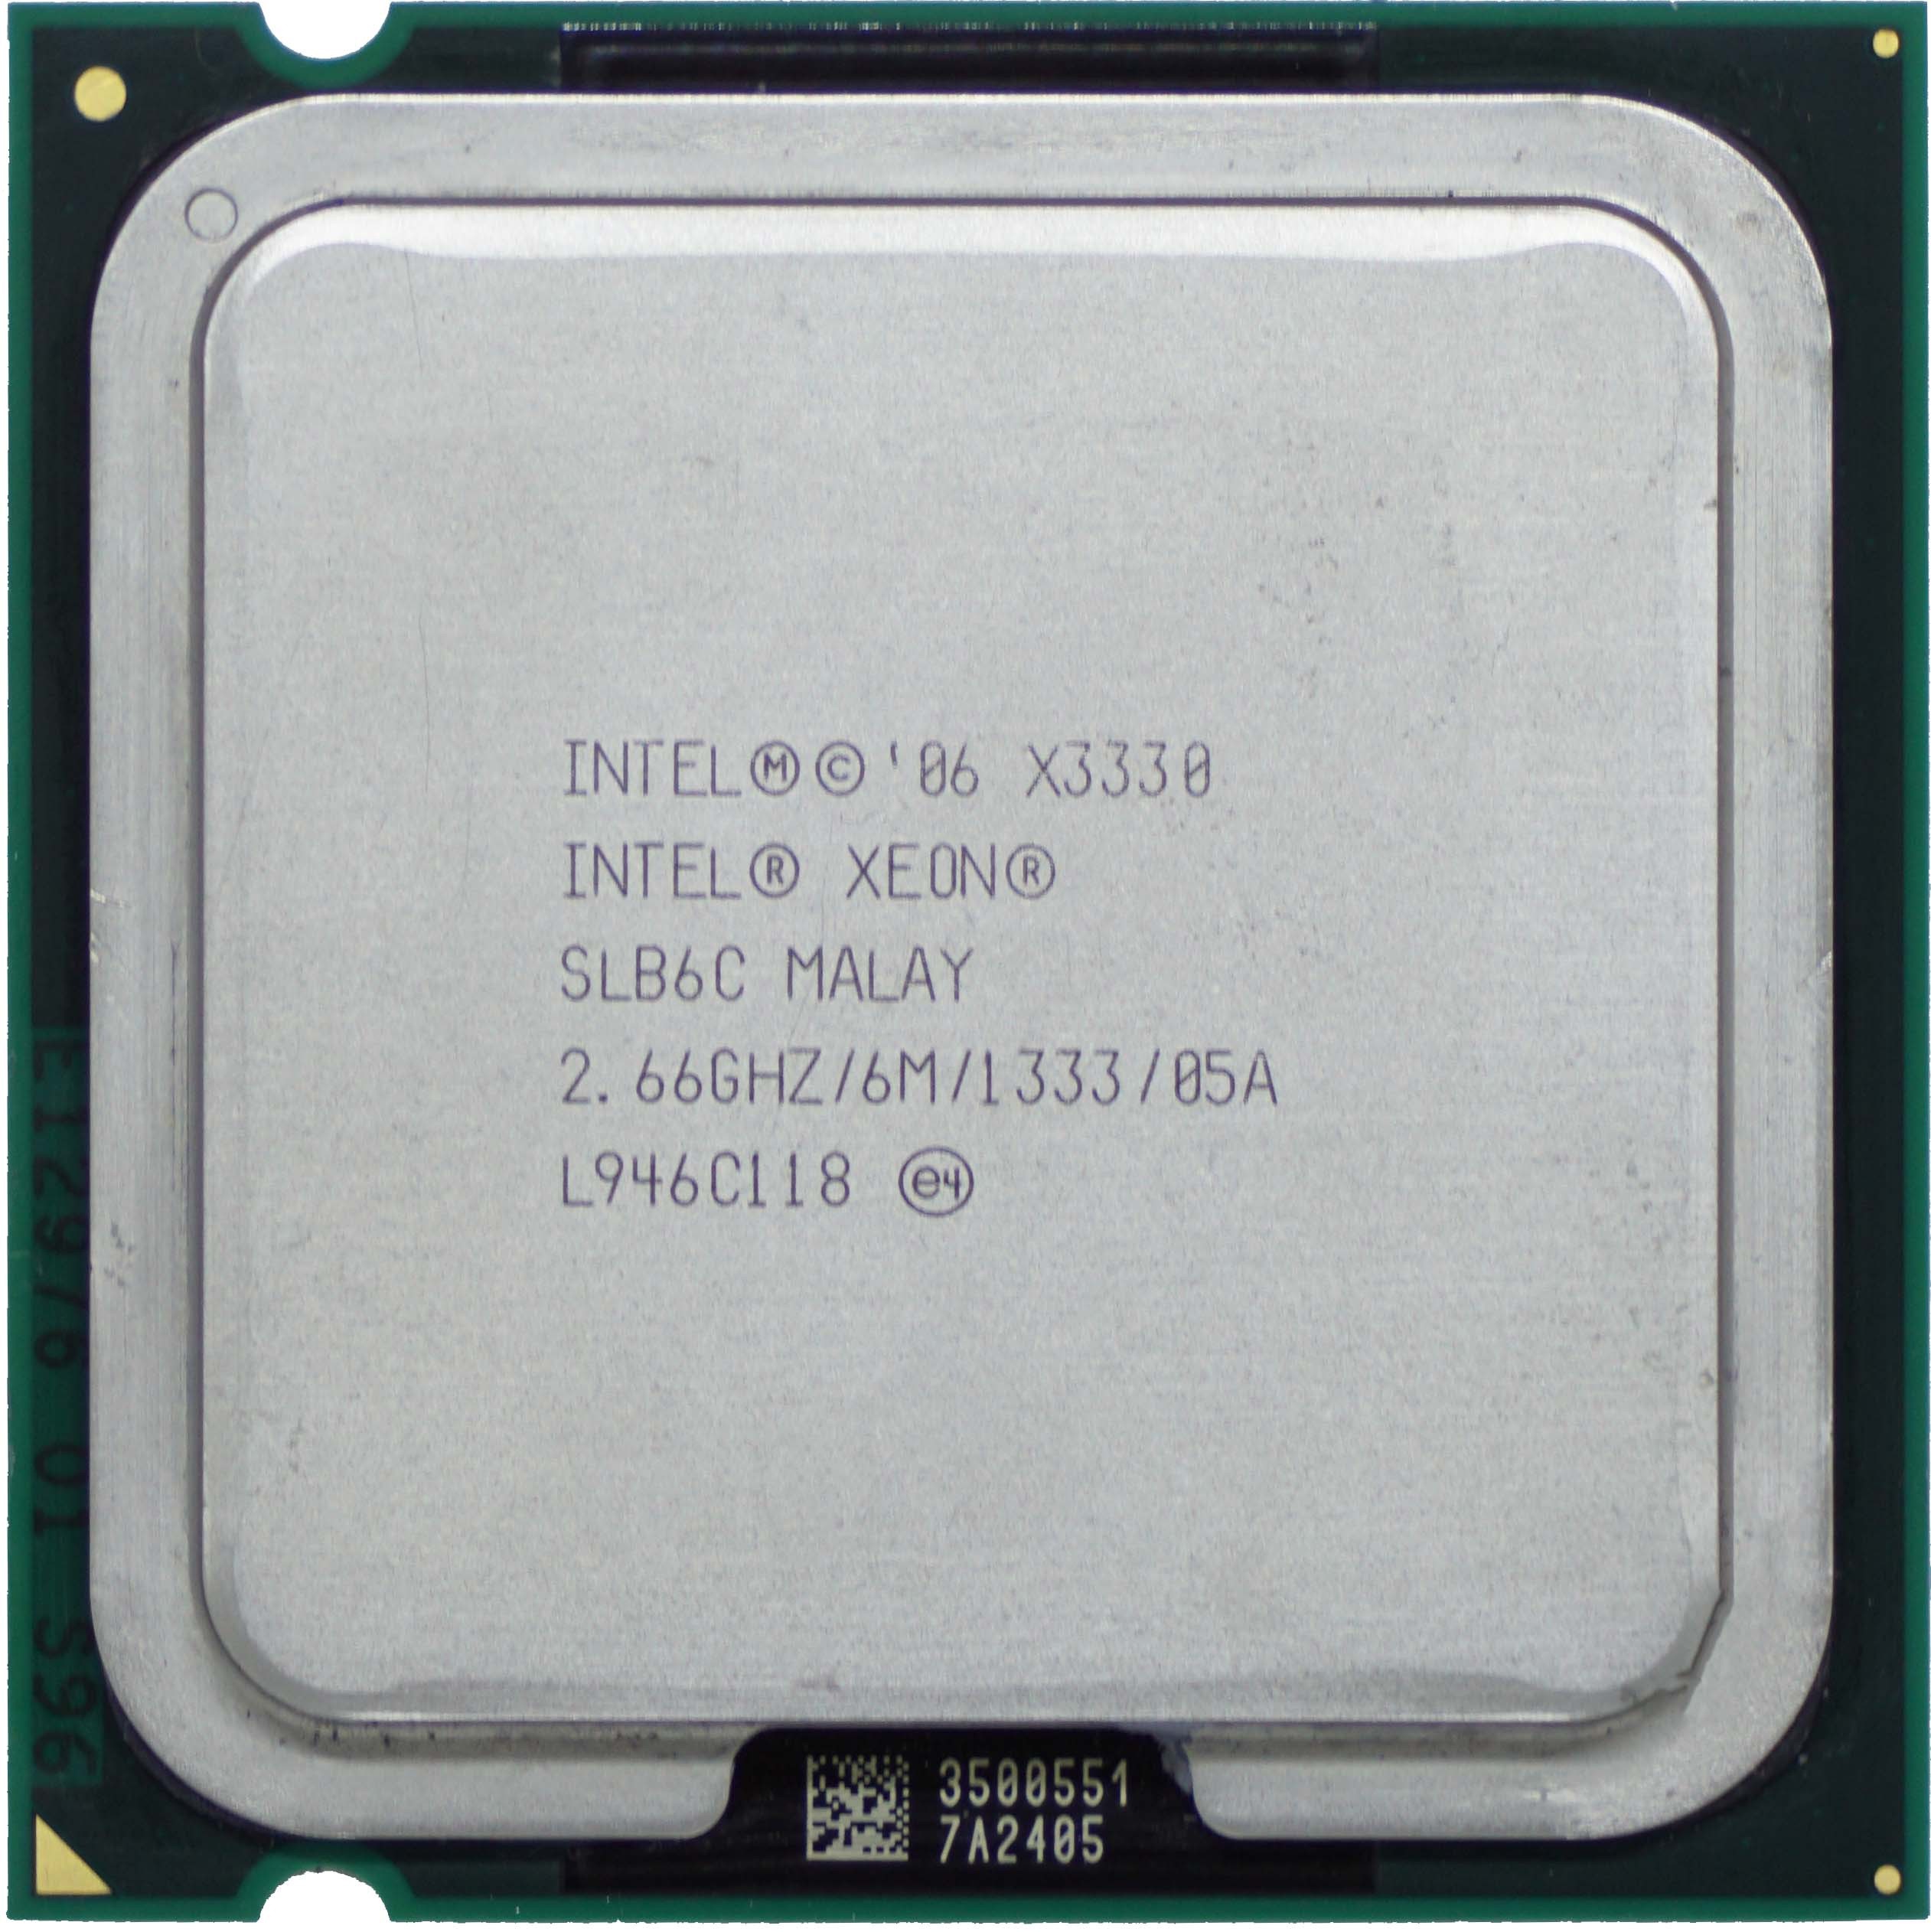 Intel Xeon X3330 (SLB6C) 2.66Ghz Quad (4) Core LGA775 95W CPU